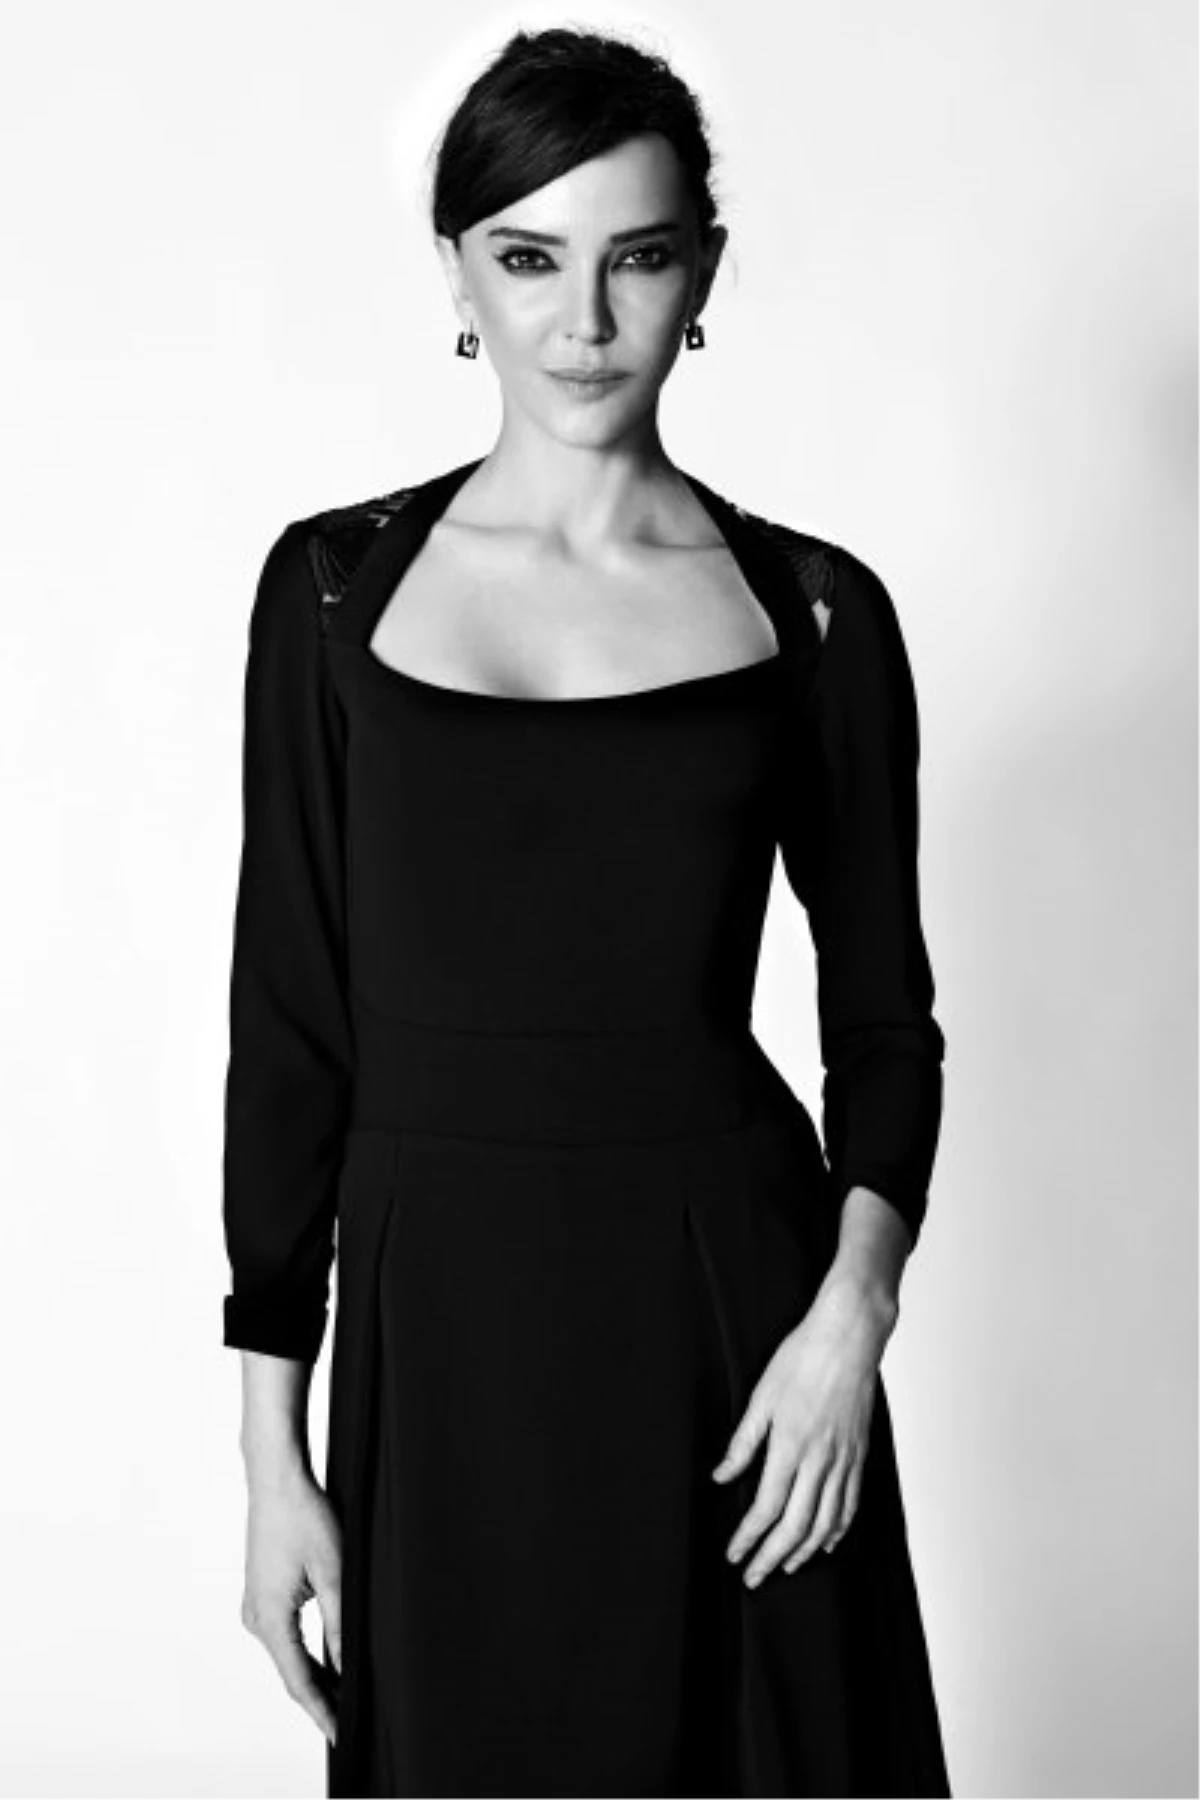 Siyah Elbise, Hande Ataizi Yorumu ile Morhipo.com\'da